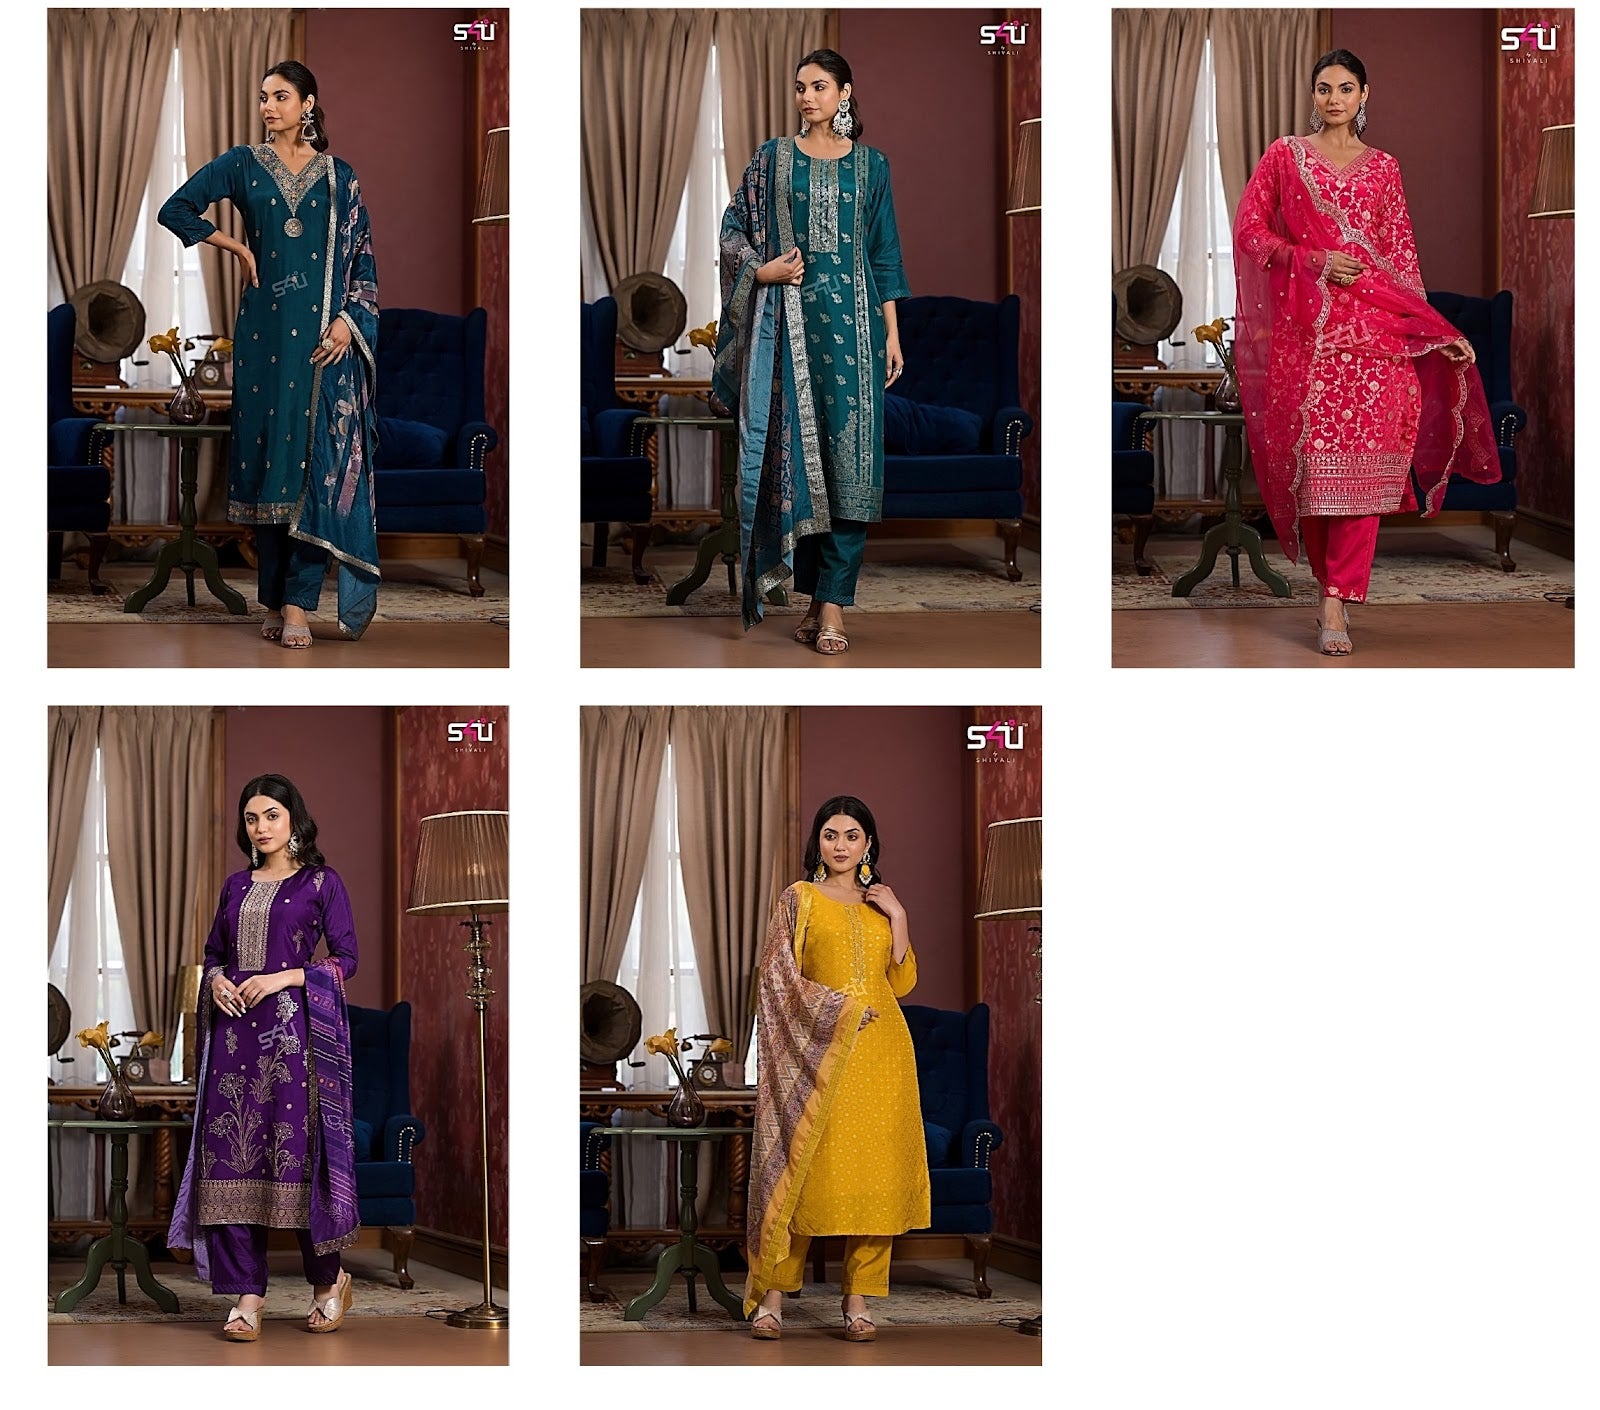 The Banaras Story Vol 2 S4U Dola Jacquard Readymade Pant Style Suits